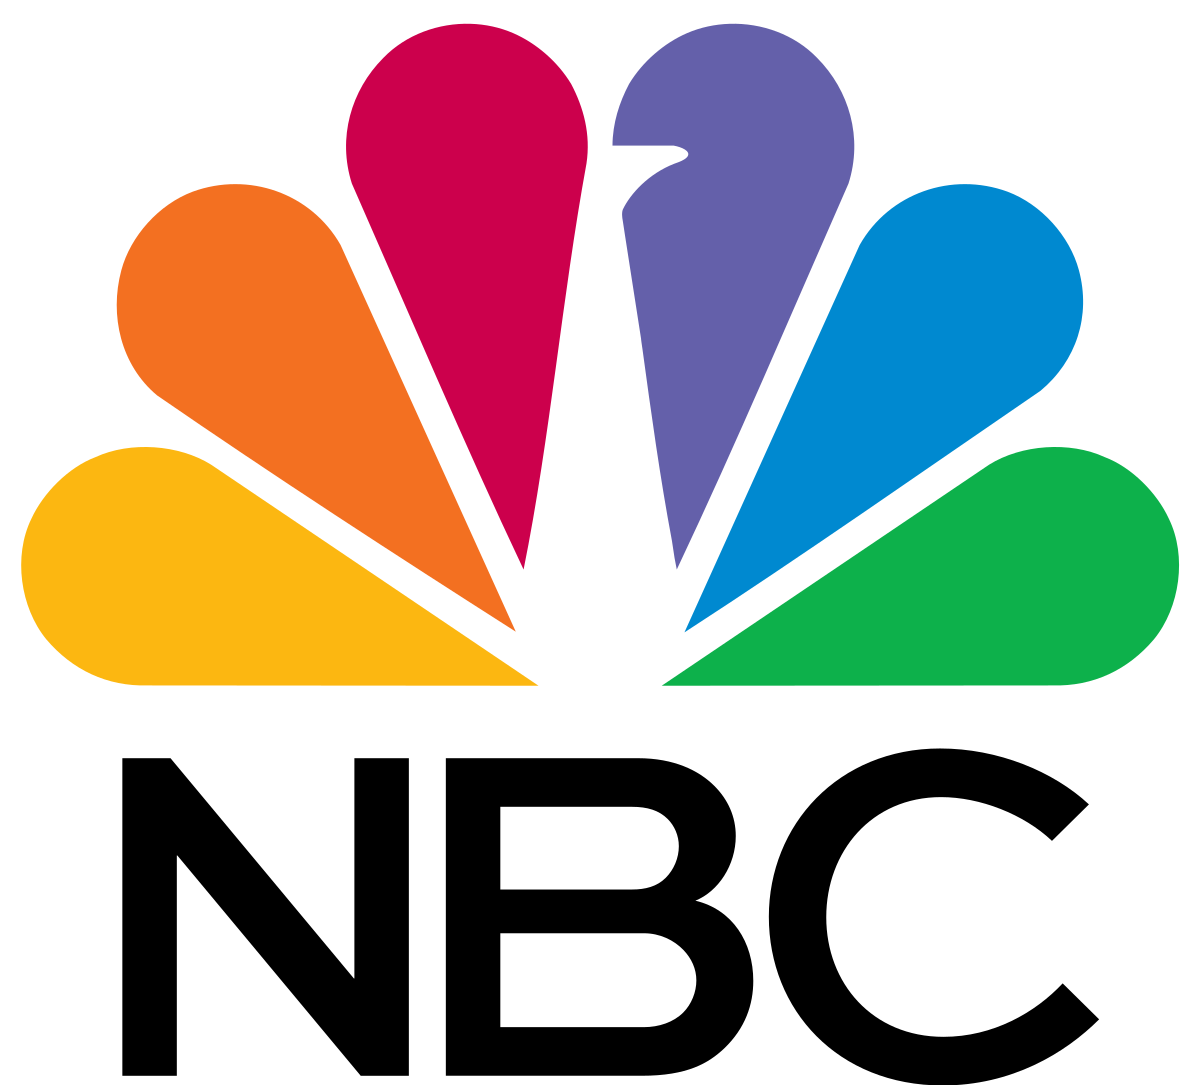 How to watch NBC On Roku: NBC live stream on Roku